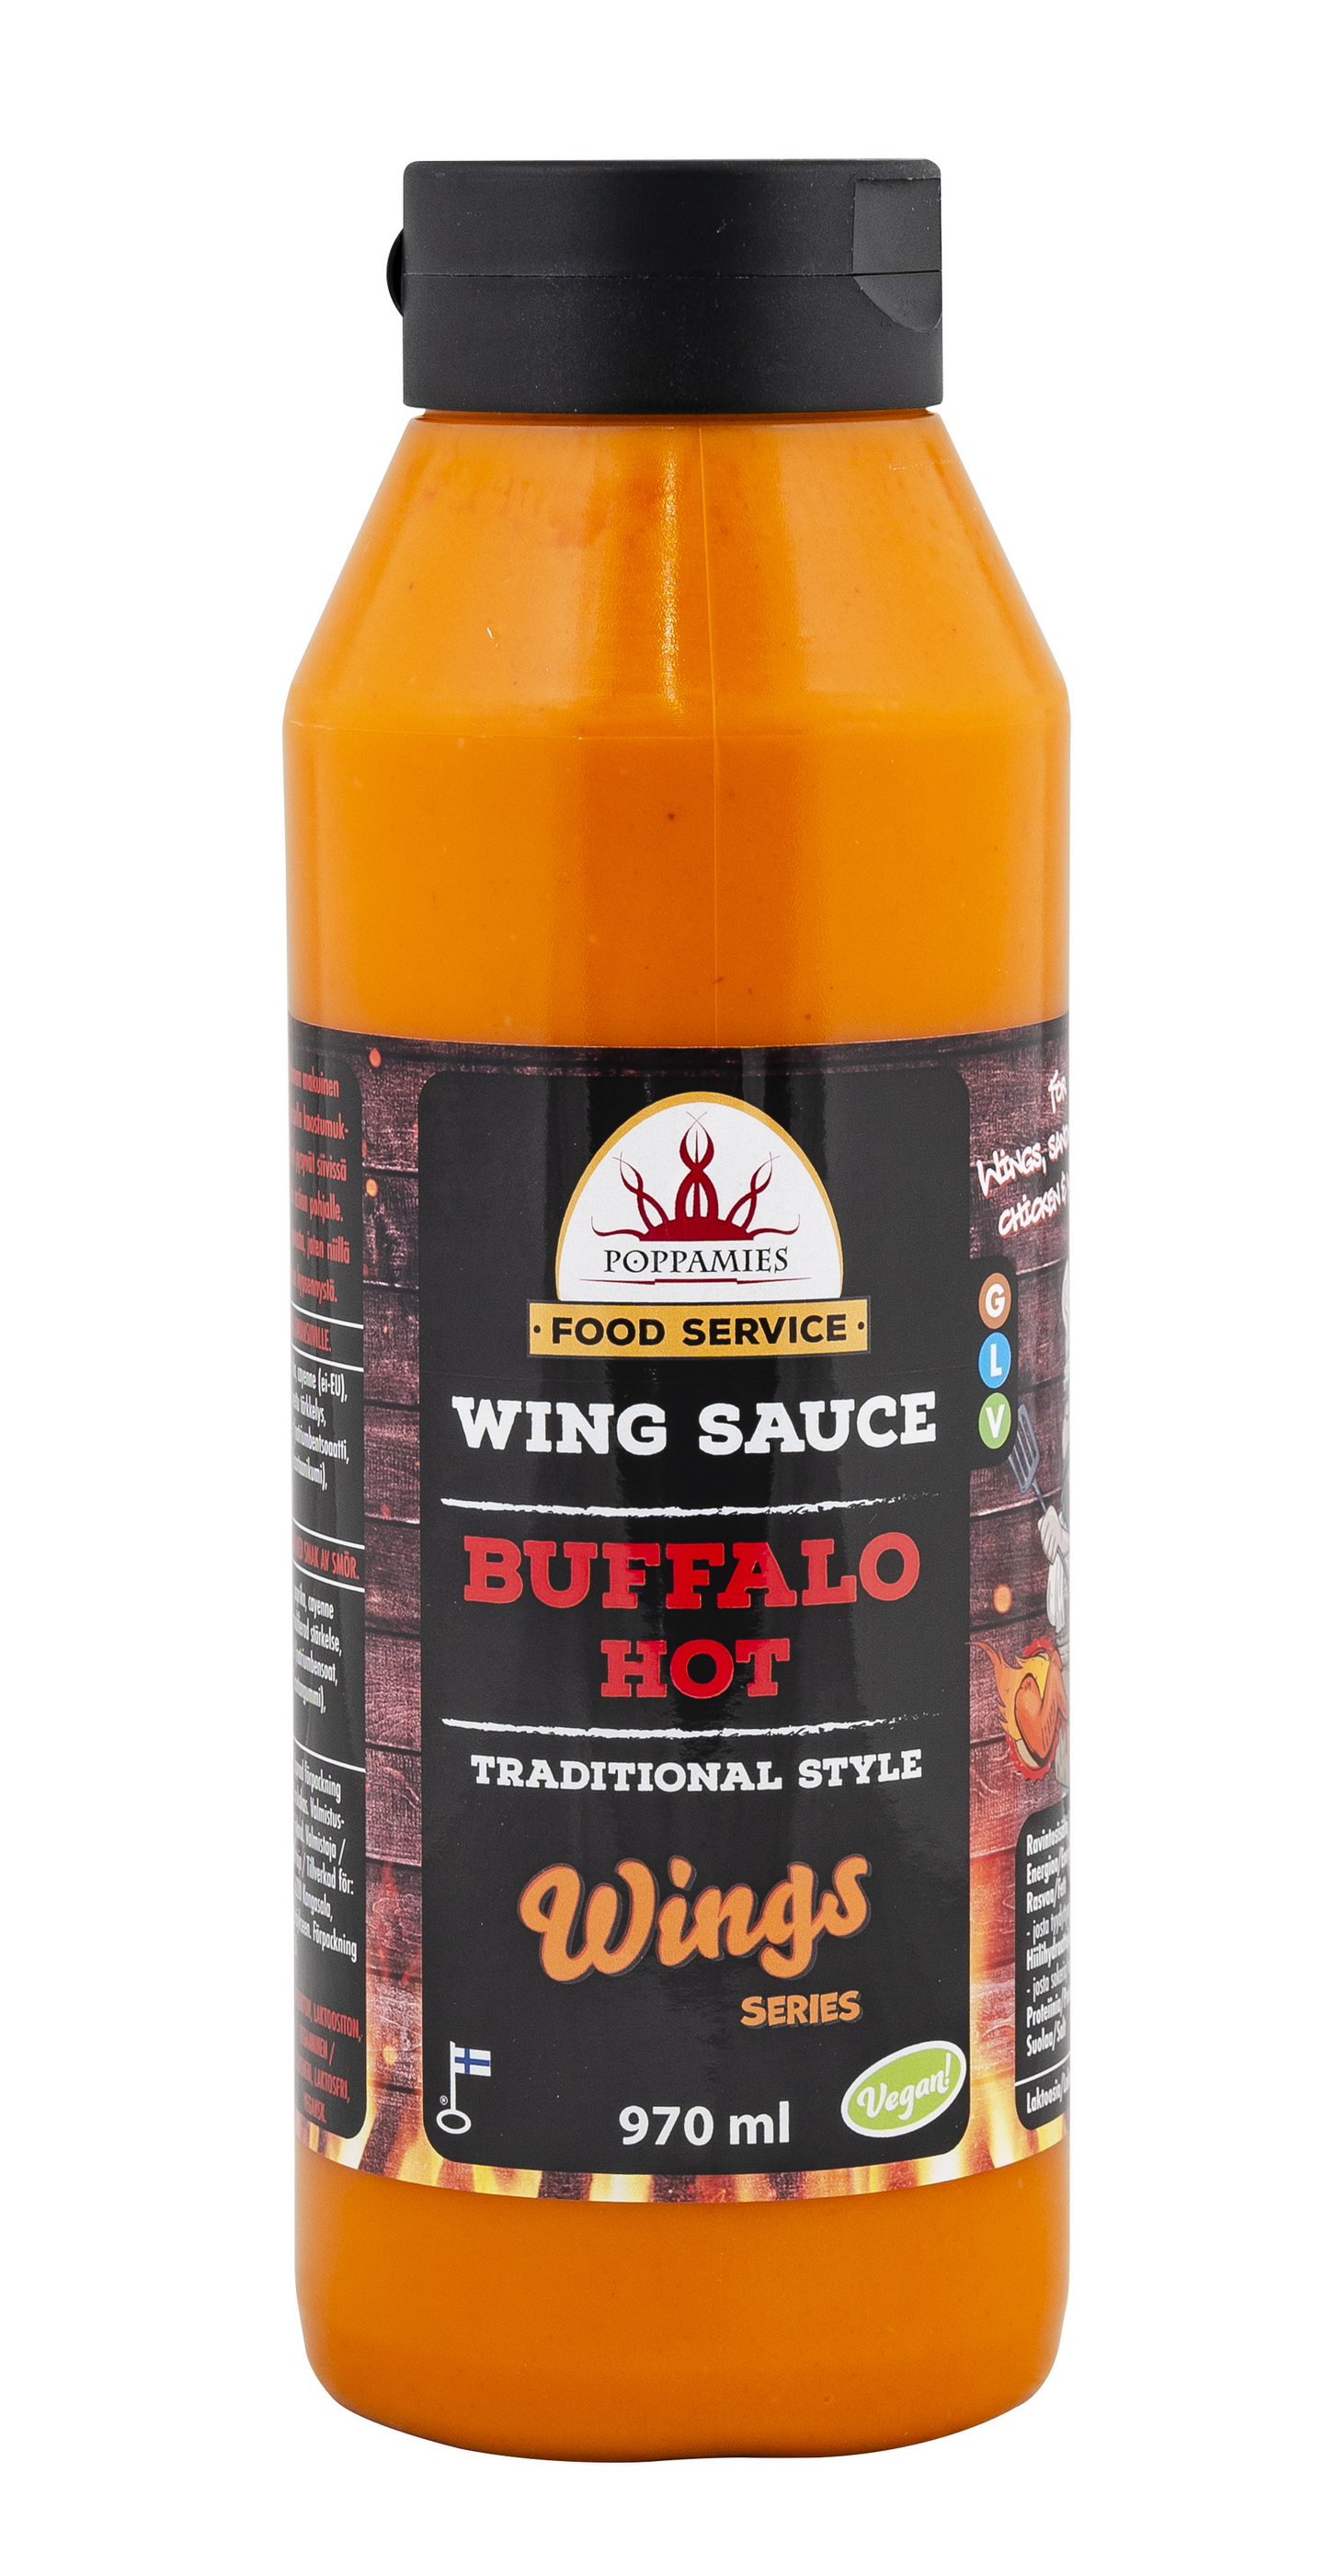 Poppamies Wing Sauce Buffalo Hot siipikastike 970ml